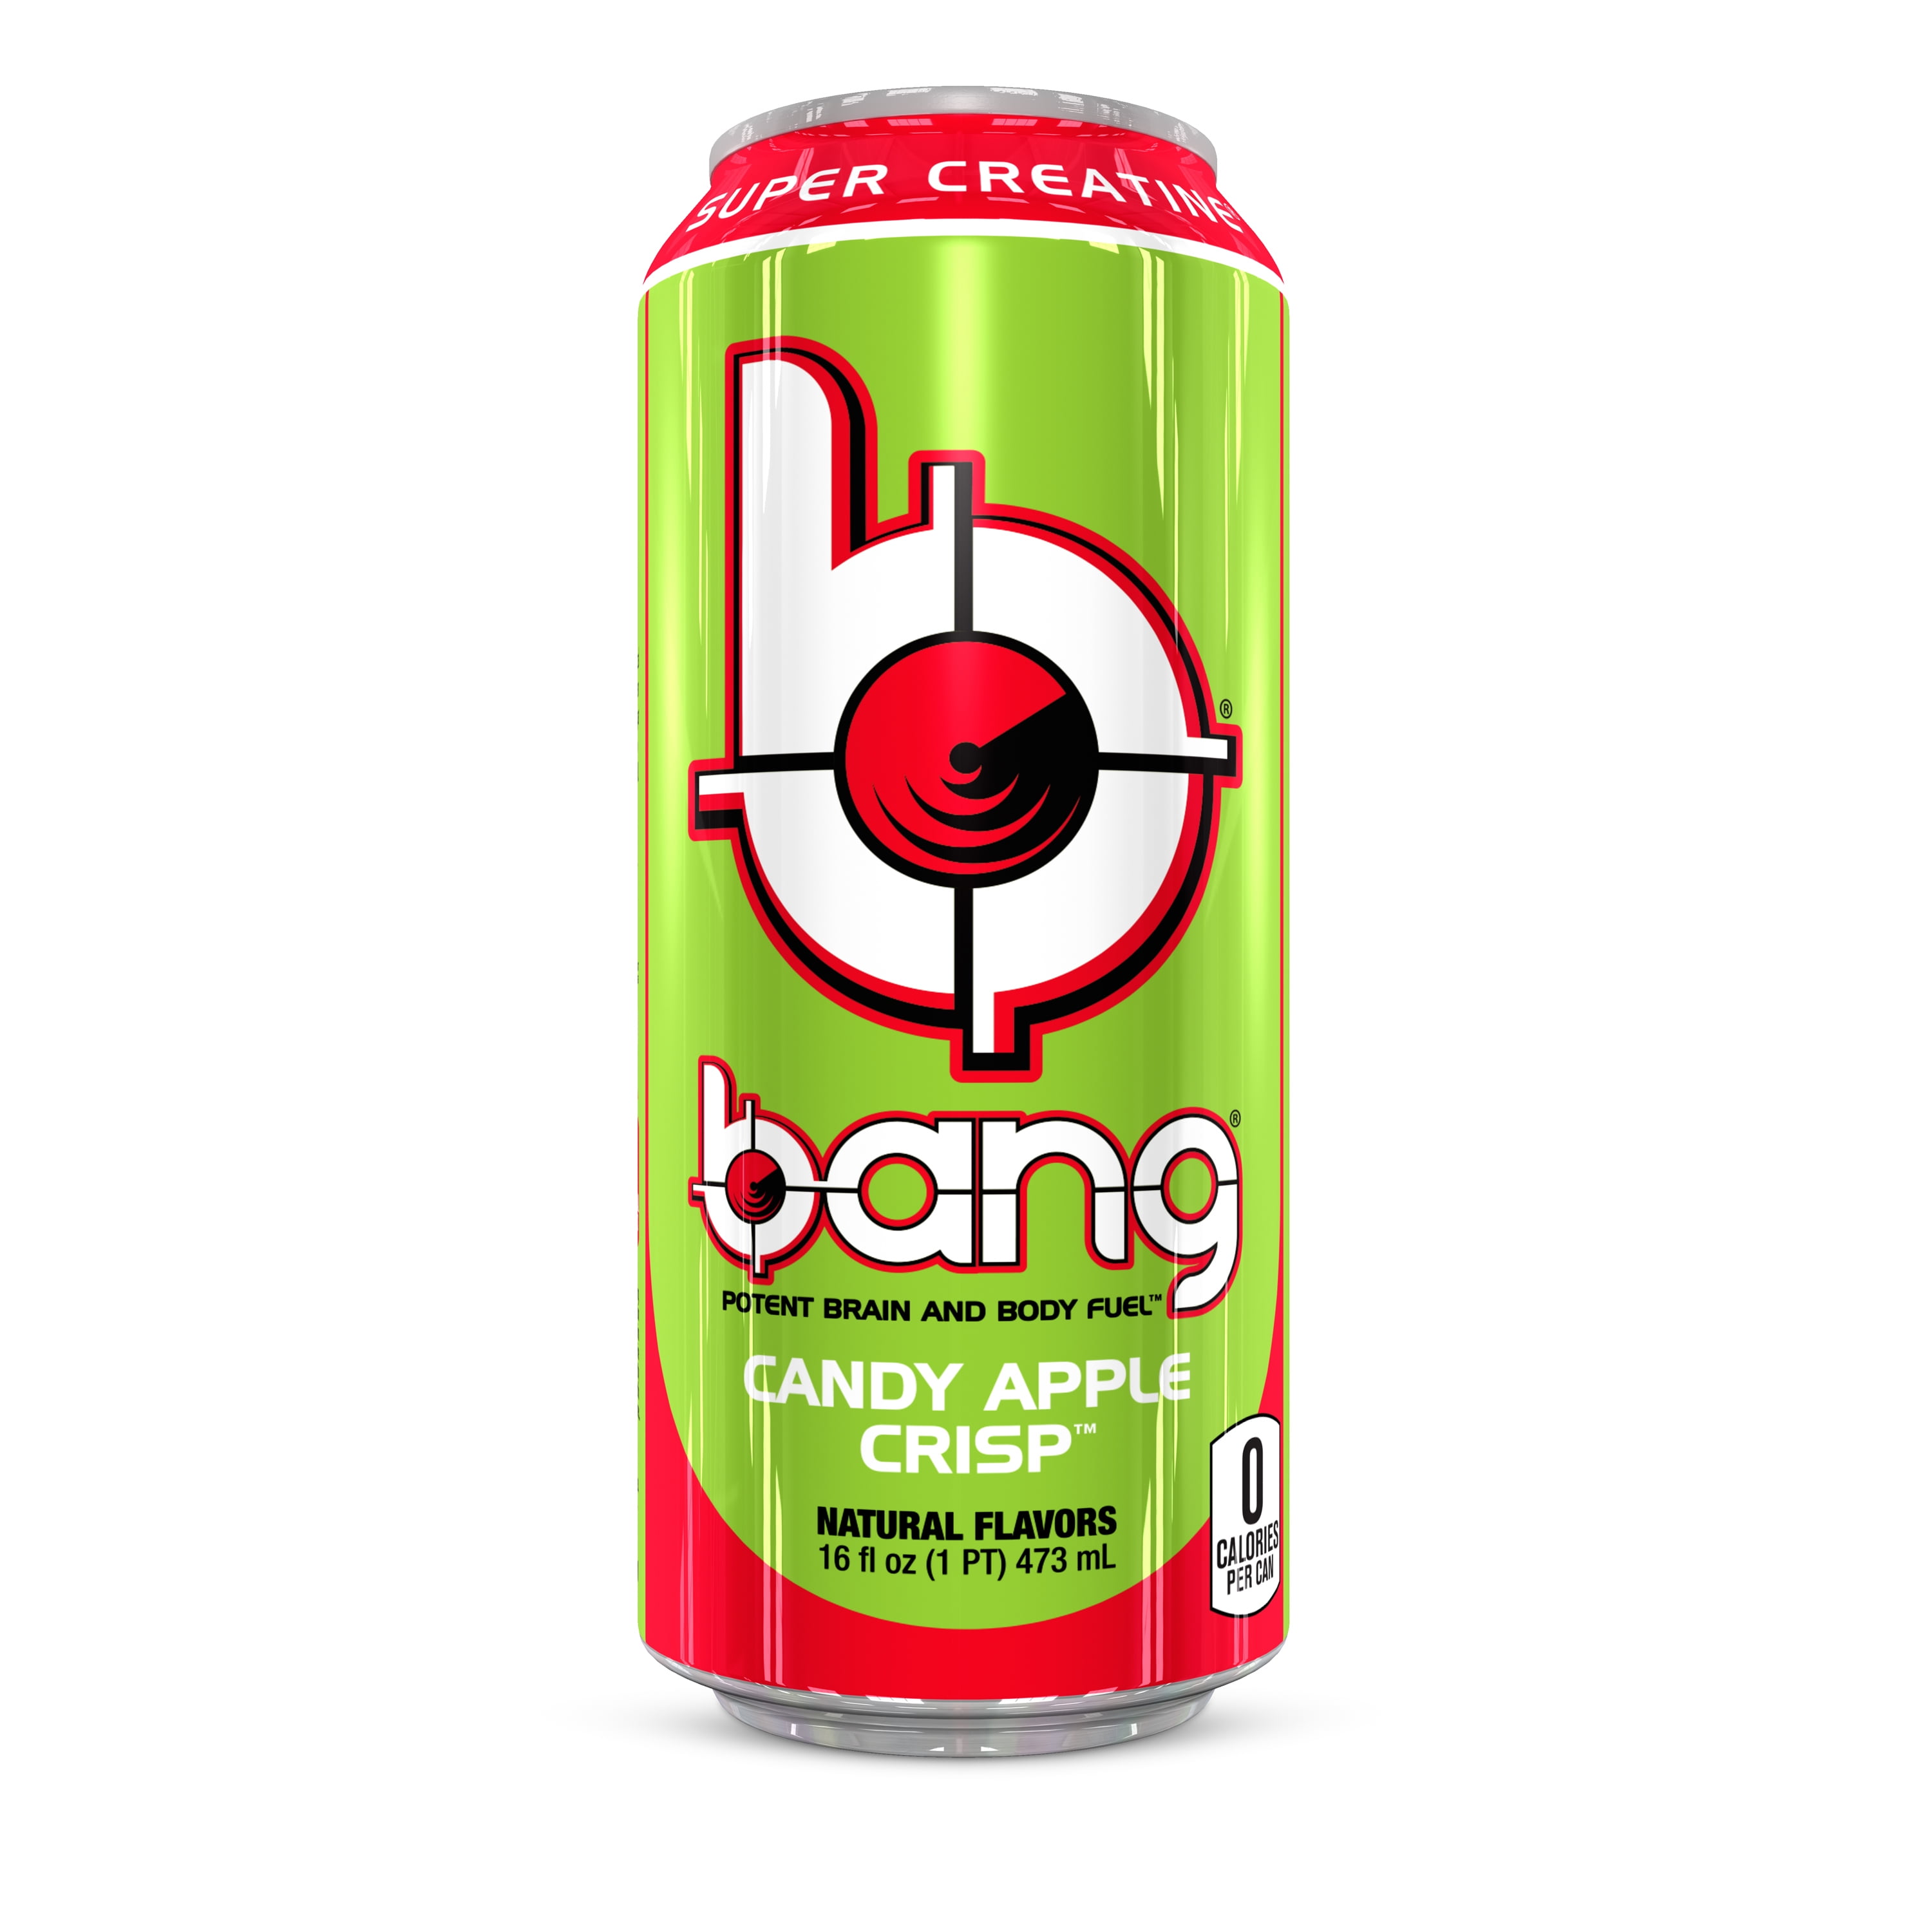 Bang Candy Apple Crisp Energy Drink With Super Creatine 16 Oz Can Walmart Com Walmart Com